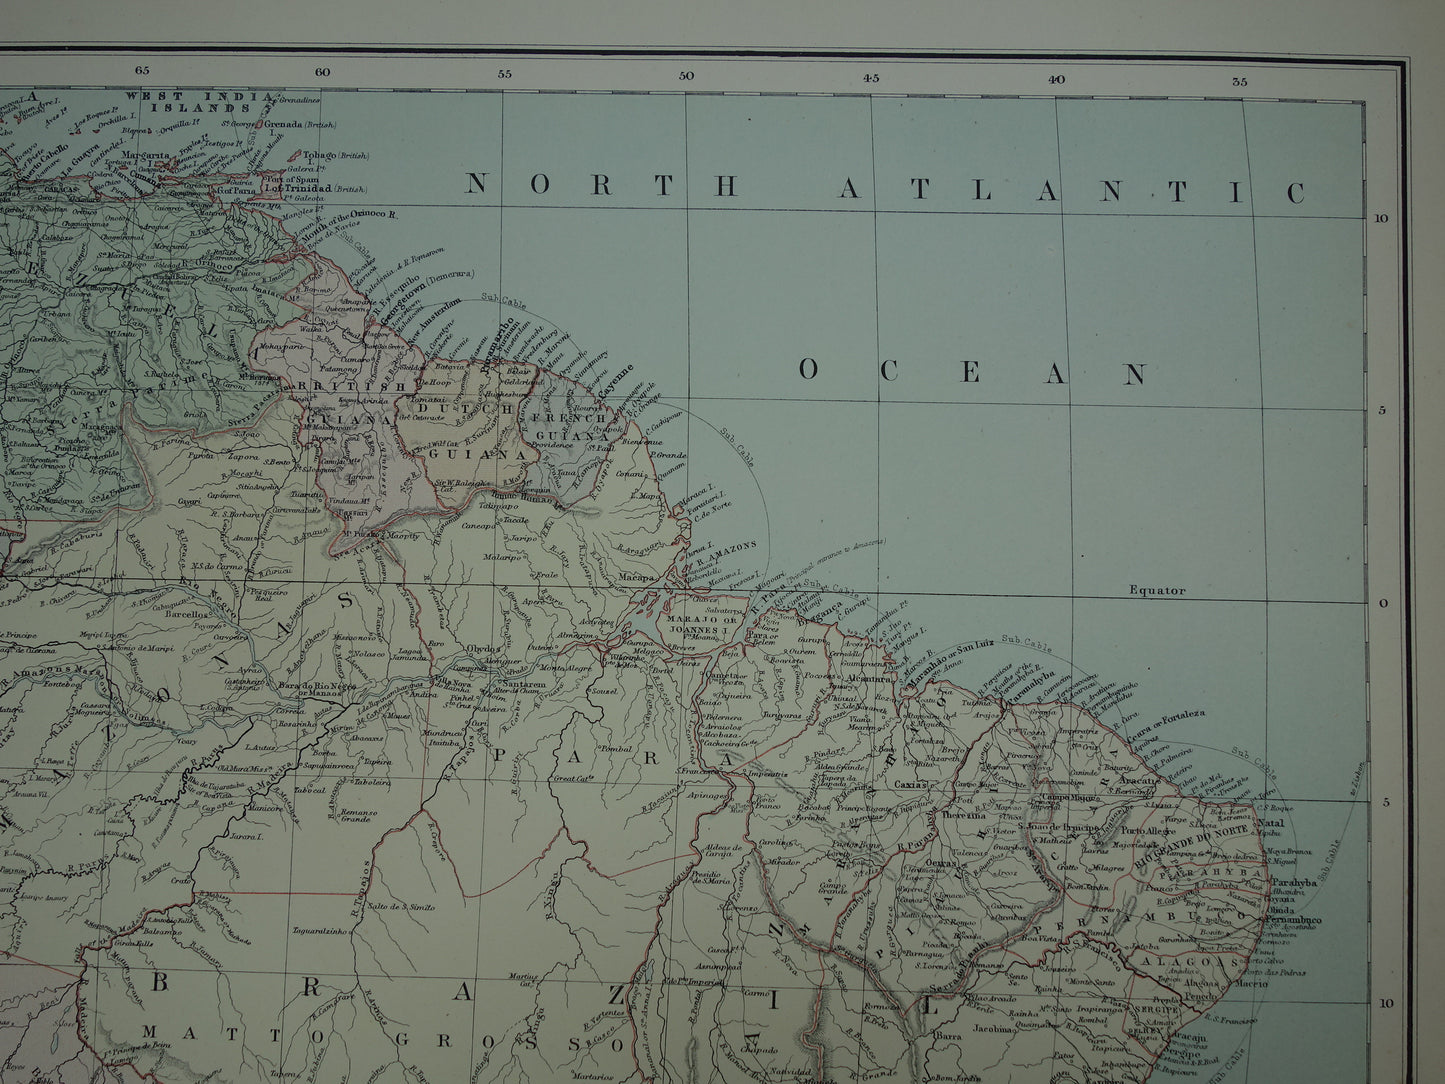 Grote oude kaart van Zuid-Amerika 1890 originele antieke landkaart van continent